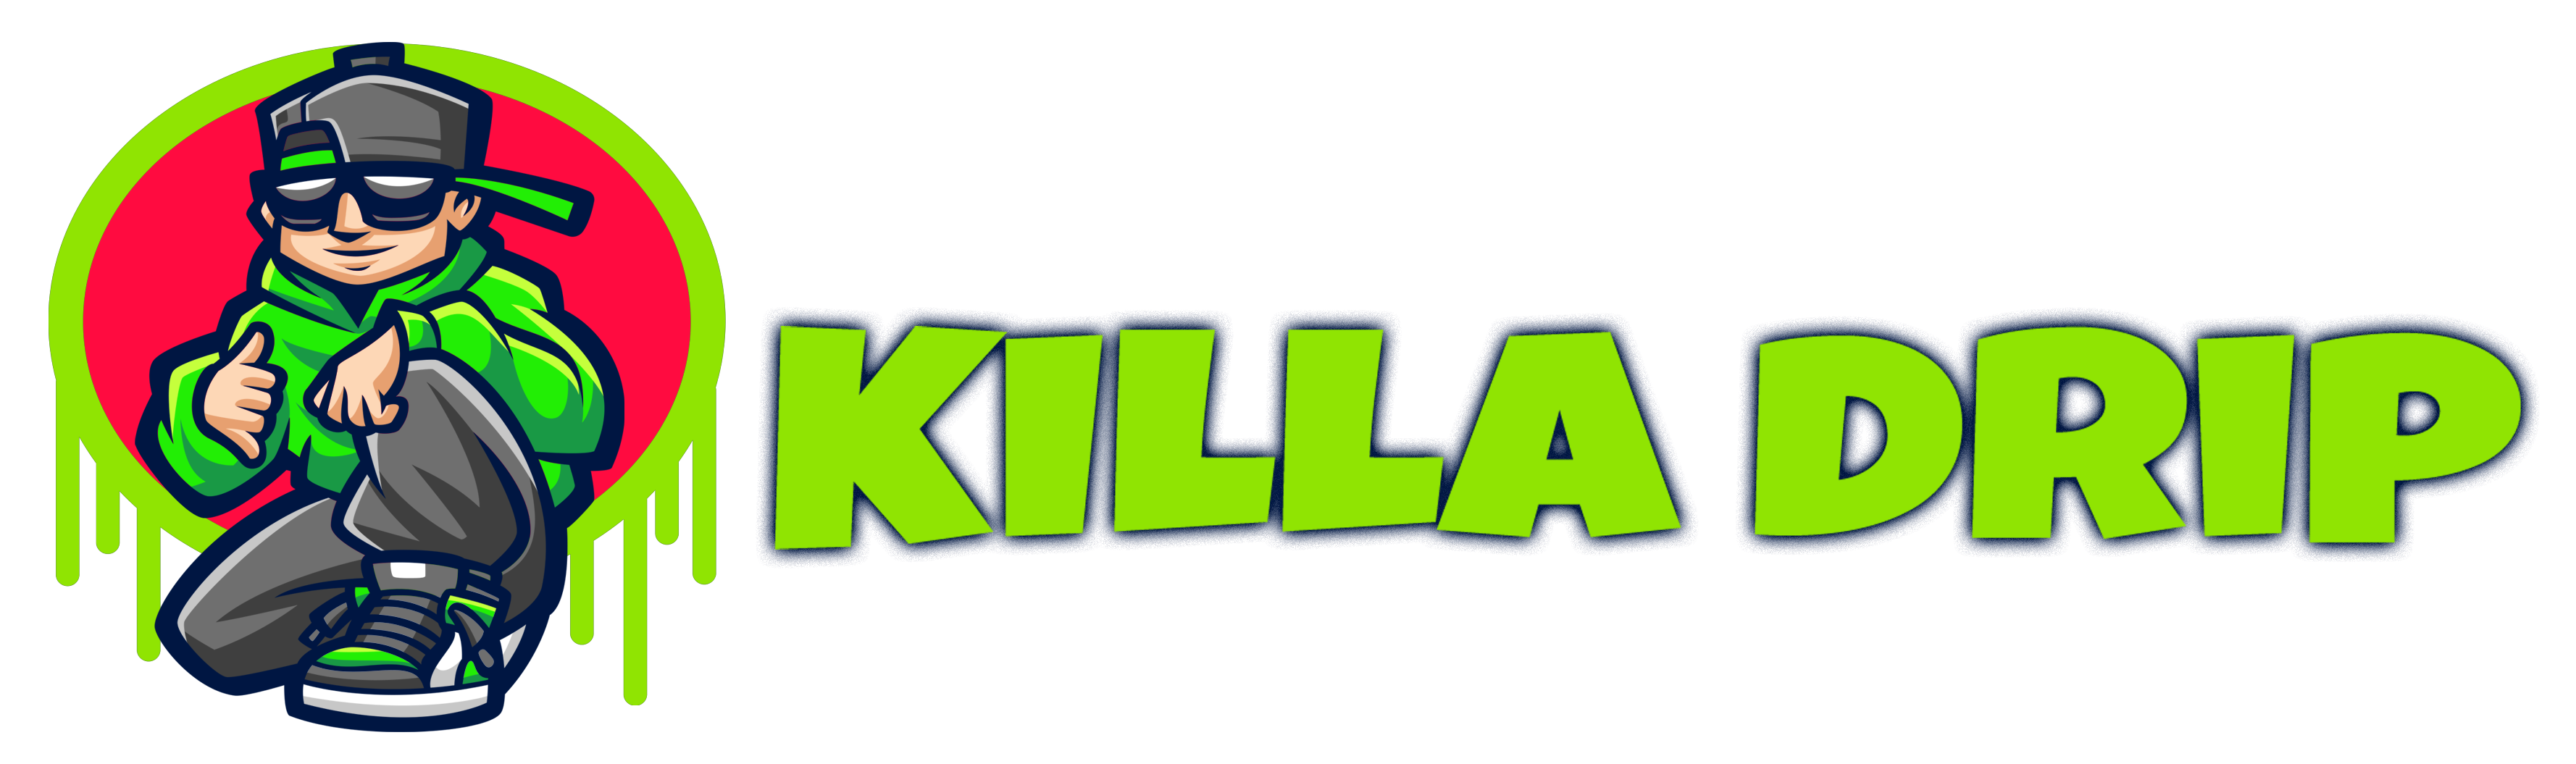 killadrip.com